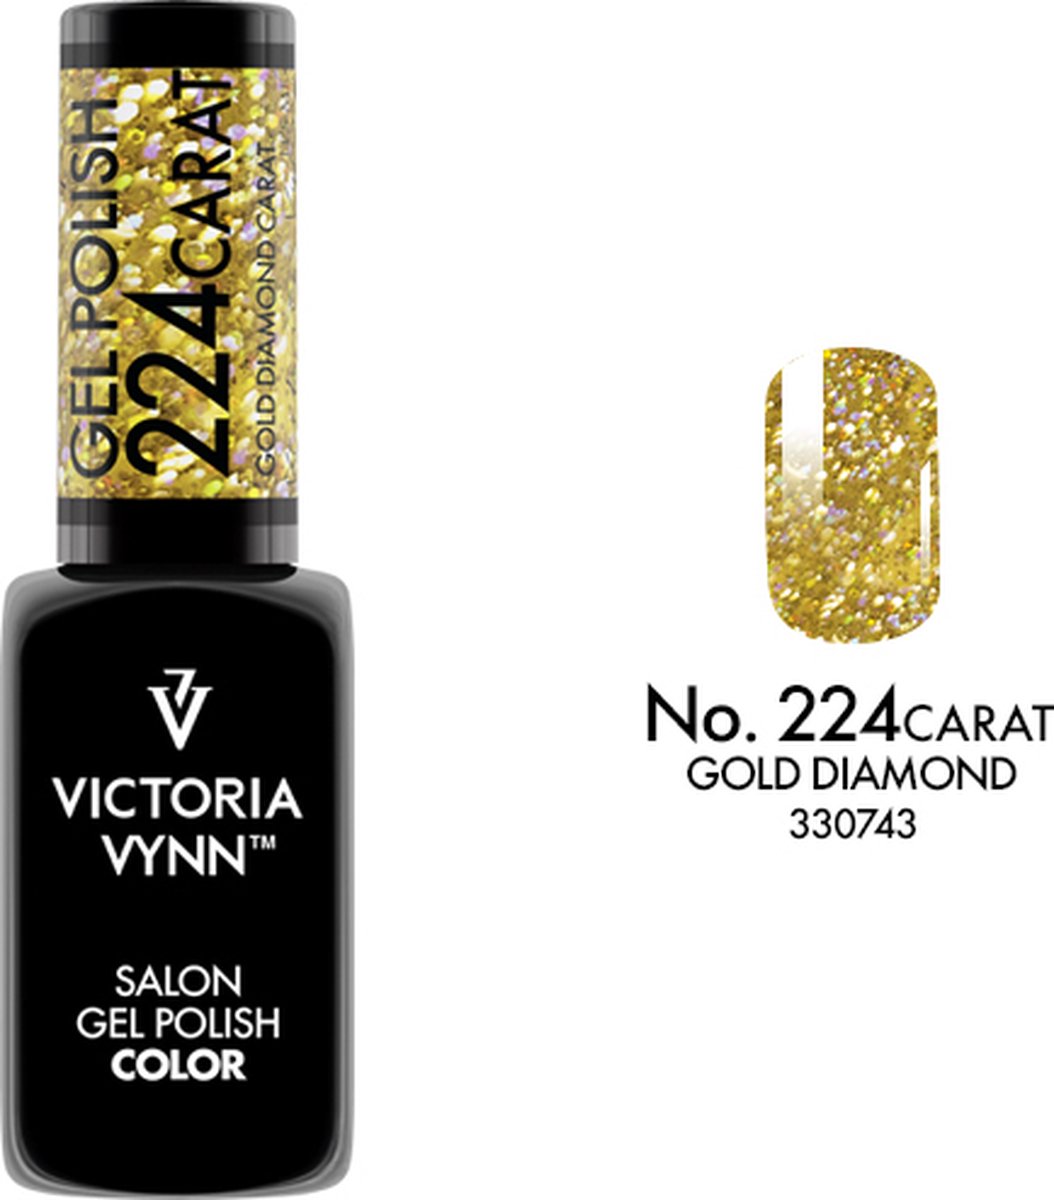 Victoria Vynn – Salon Gelpolish 224 Carat Gold Diamond - gouden glitter gel polish - goud - gellak - lak - glitters - nagels - nagelverzorging - nagelstyliste - uv / led - nagelstylist - callance